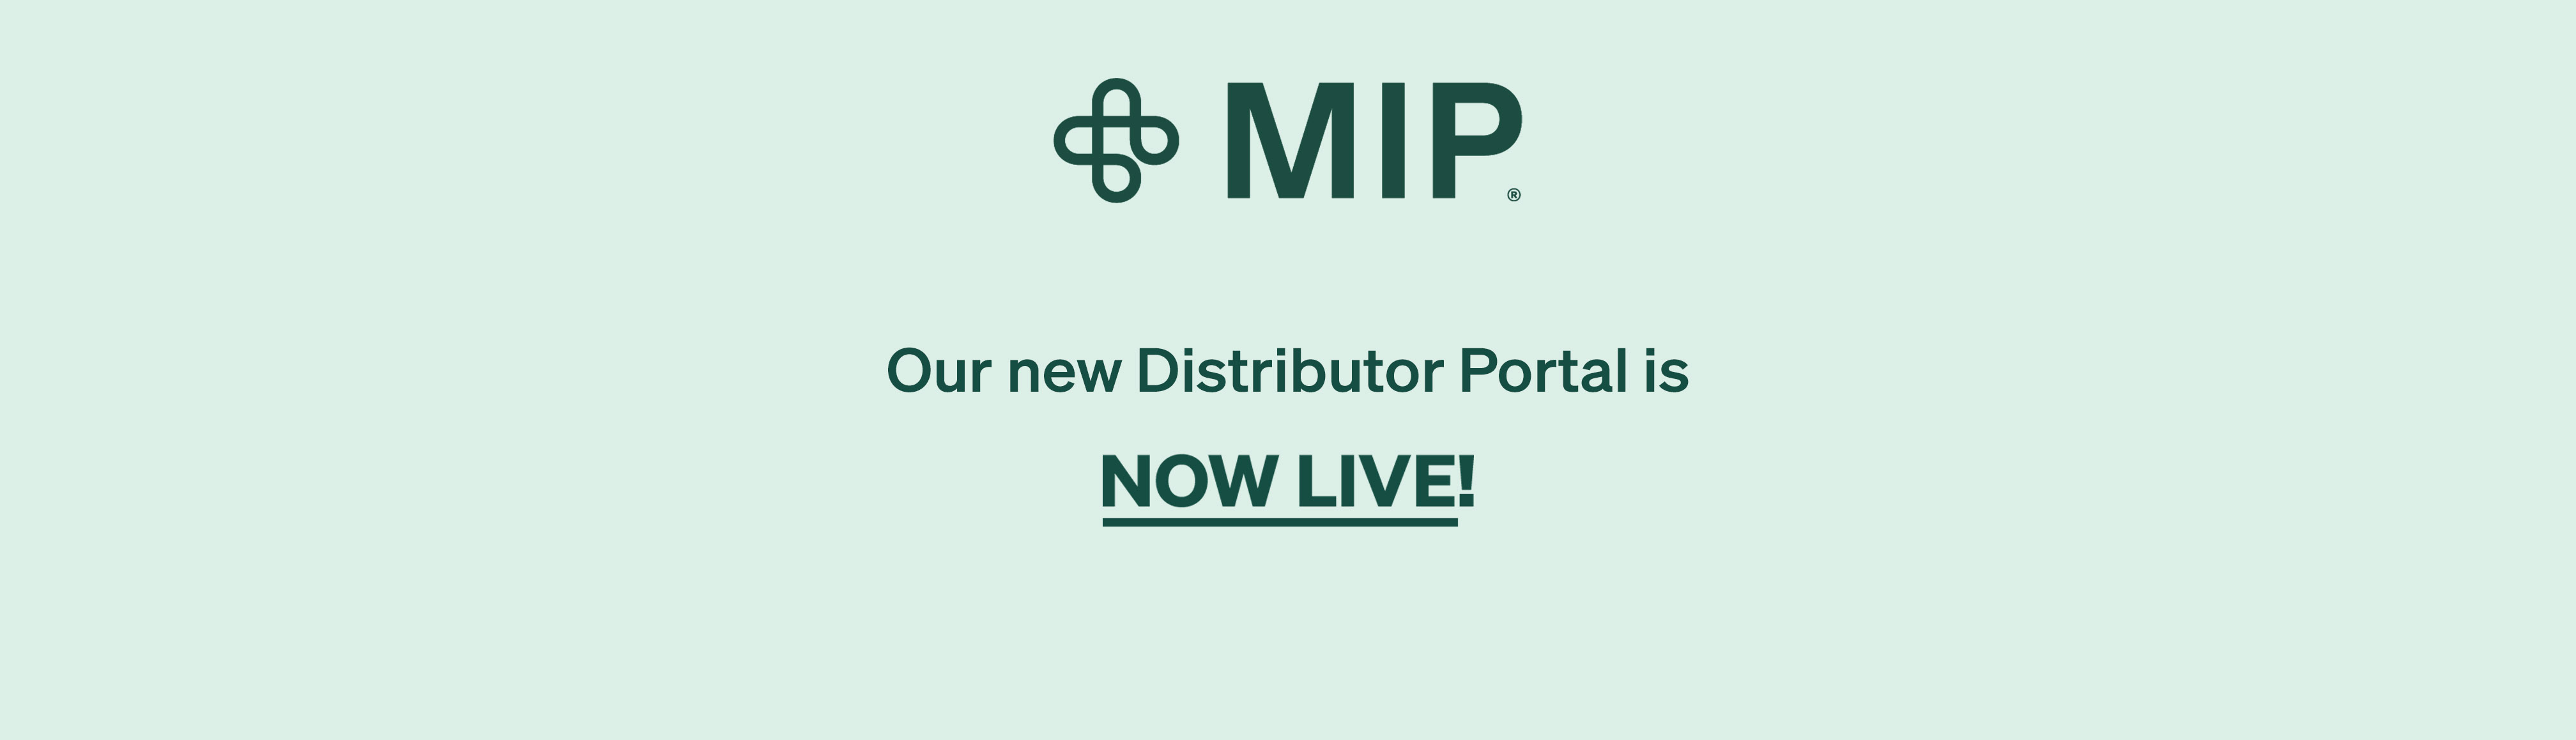 MIP UK Distributor Portal - NOW LIVE